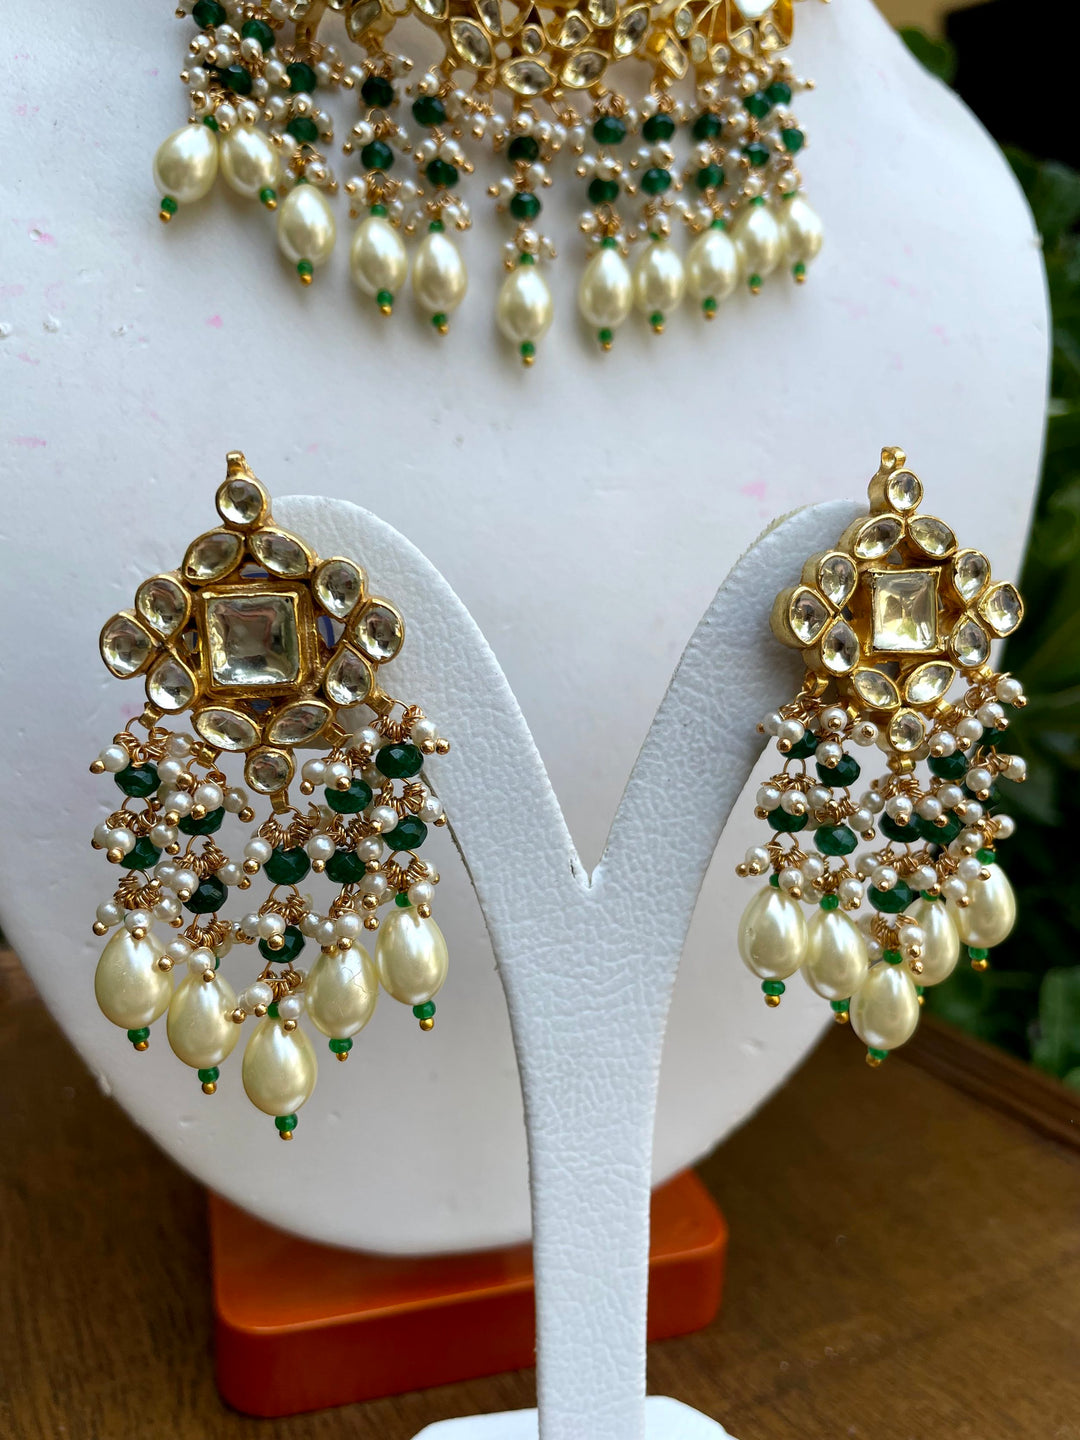 Suri Imitation Kundan Polki Diamond Choker Necklace and Earrings Set with Green and Cream Beads